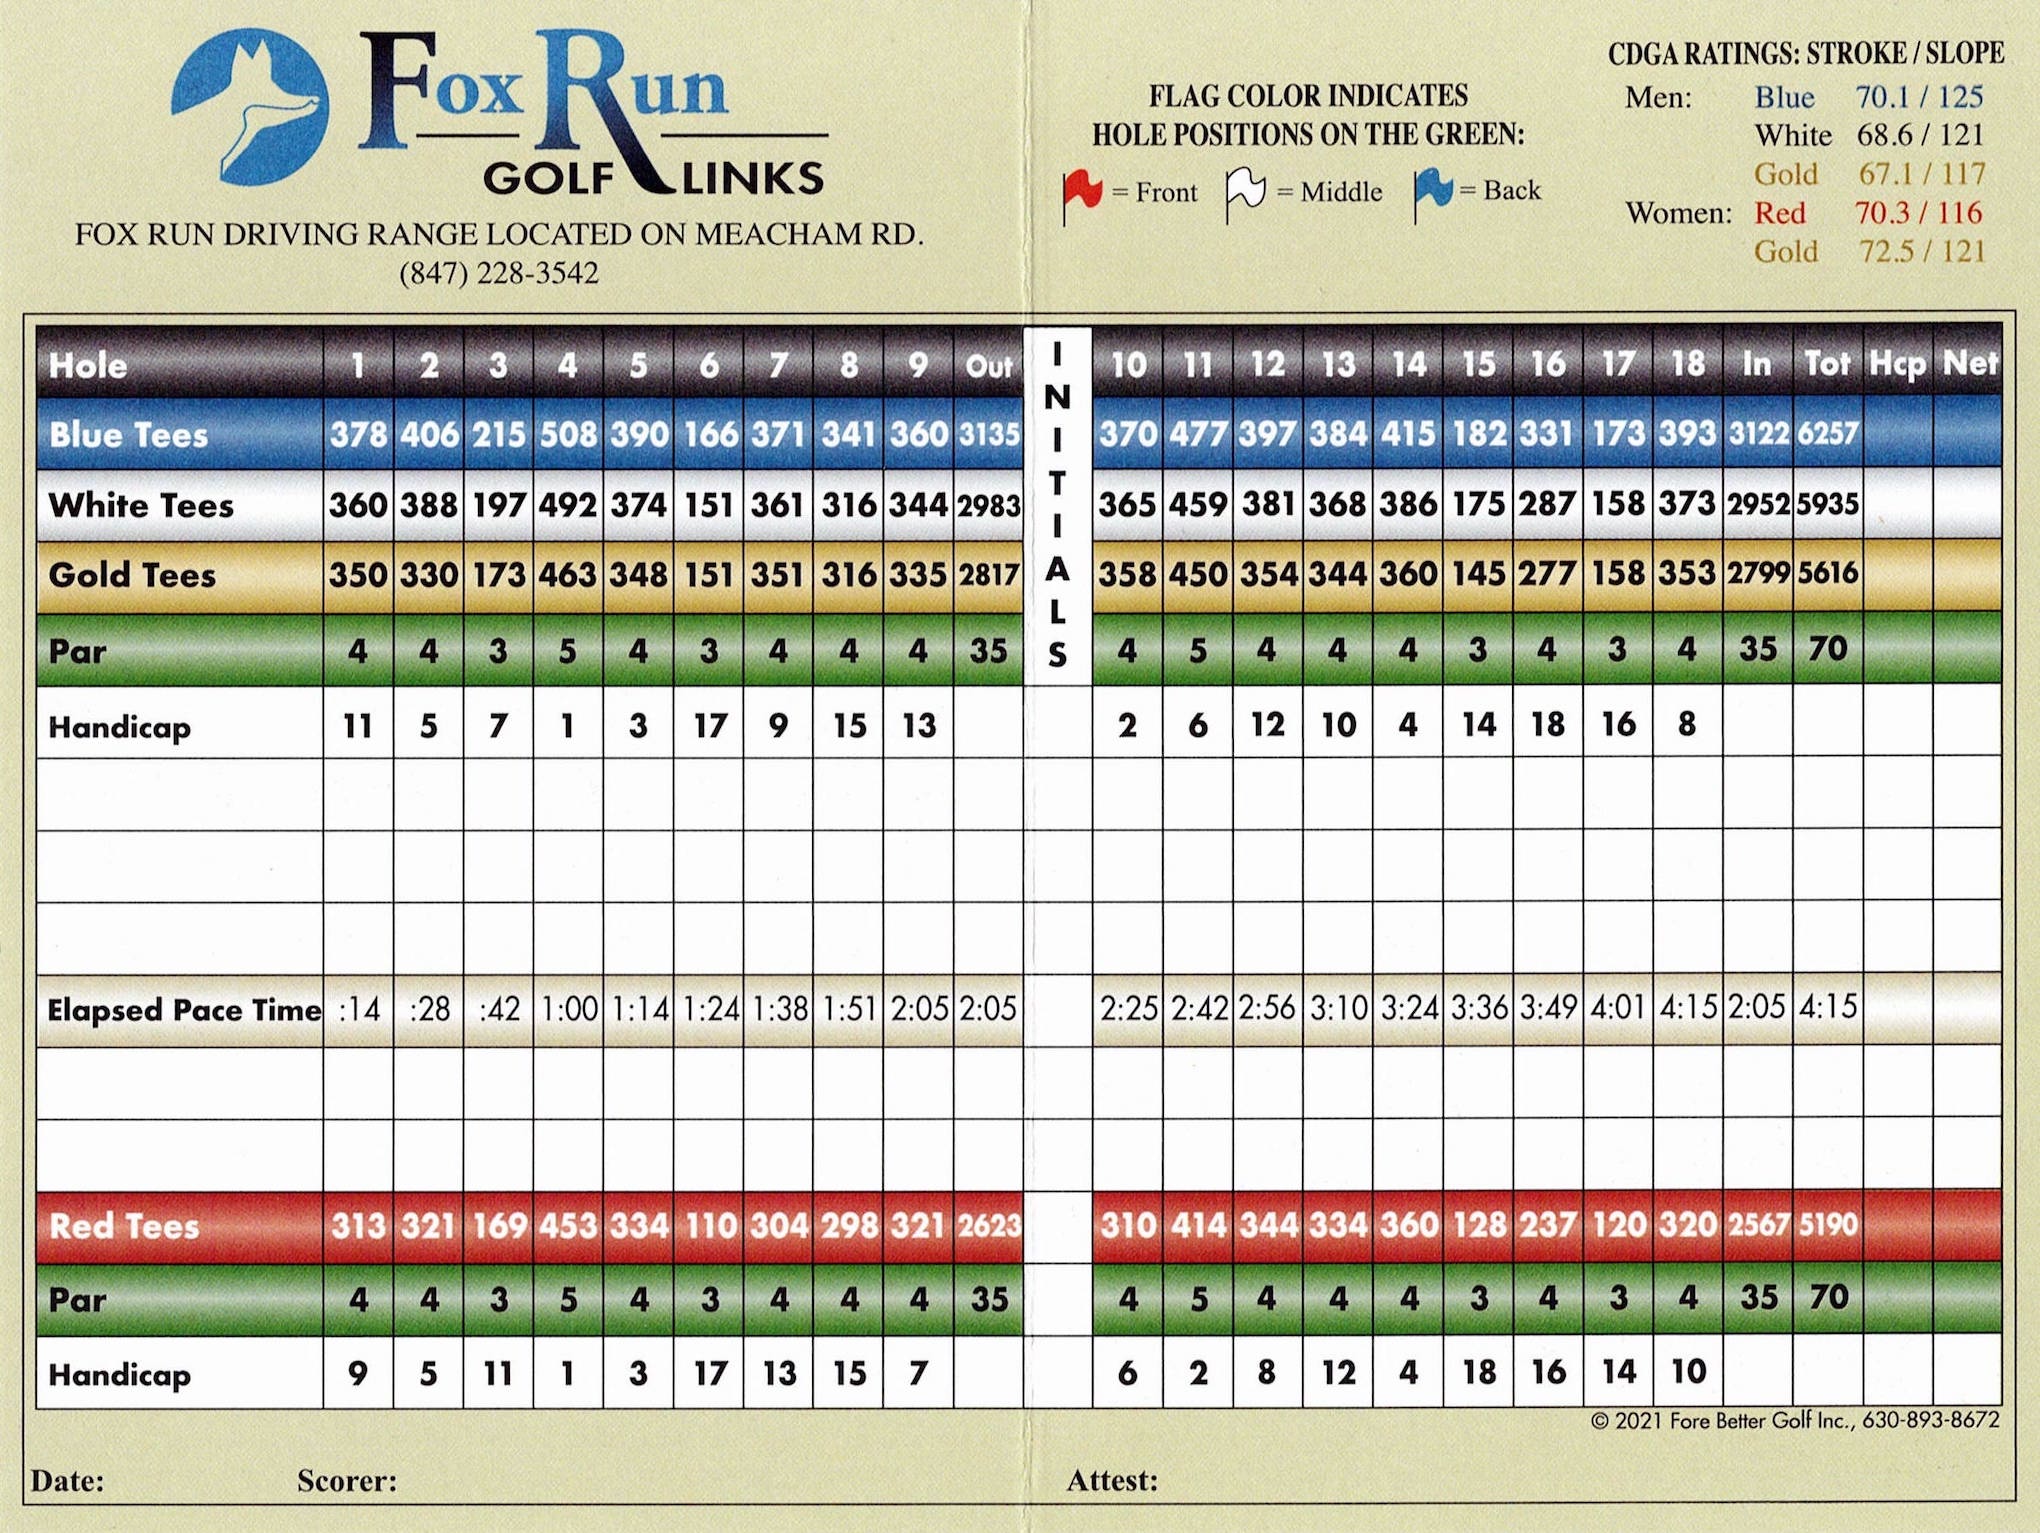 Scan of the scorecard from Fox Run Golf Links in Elk Grove Village, Illinois. 